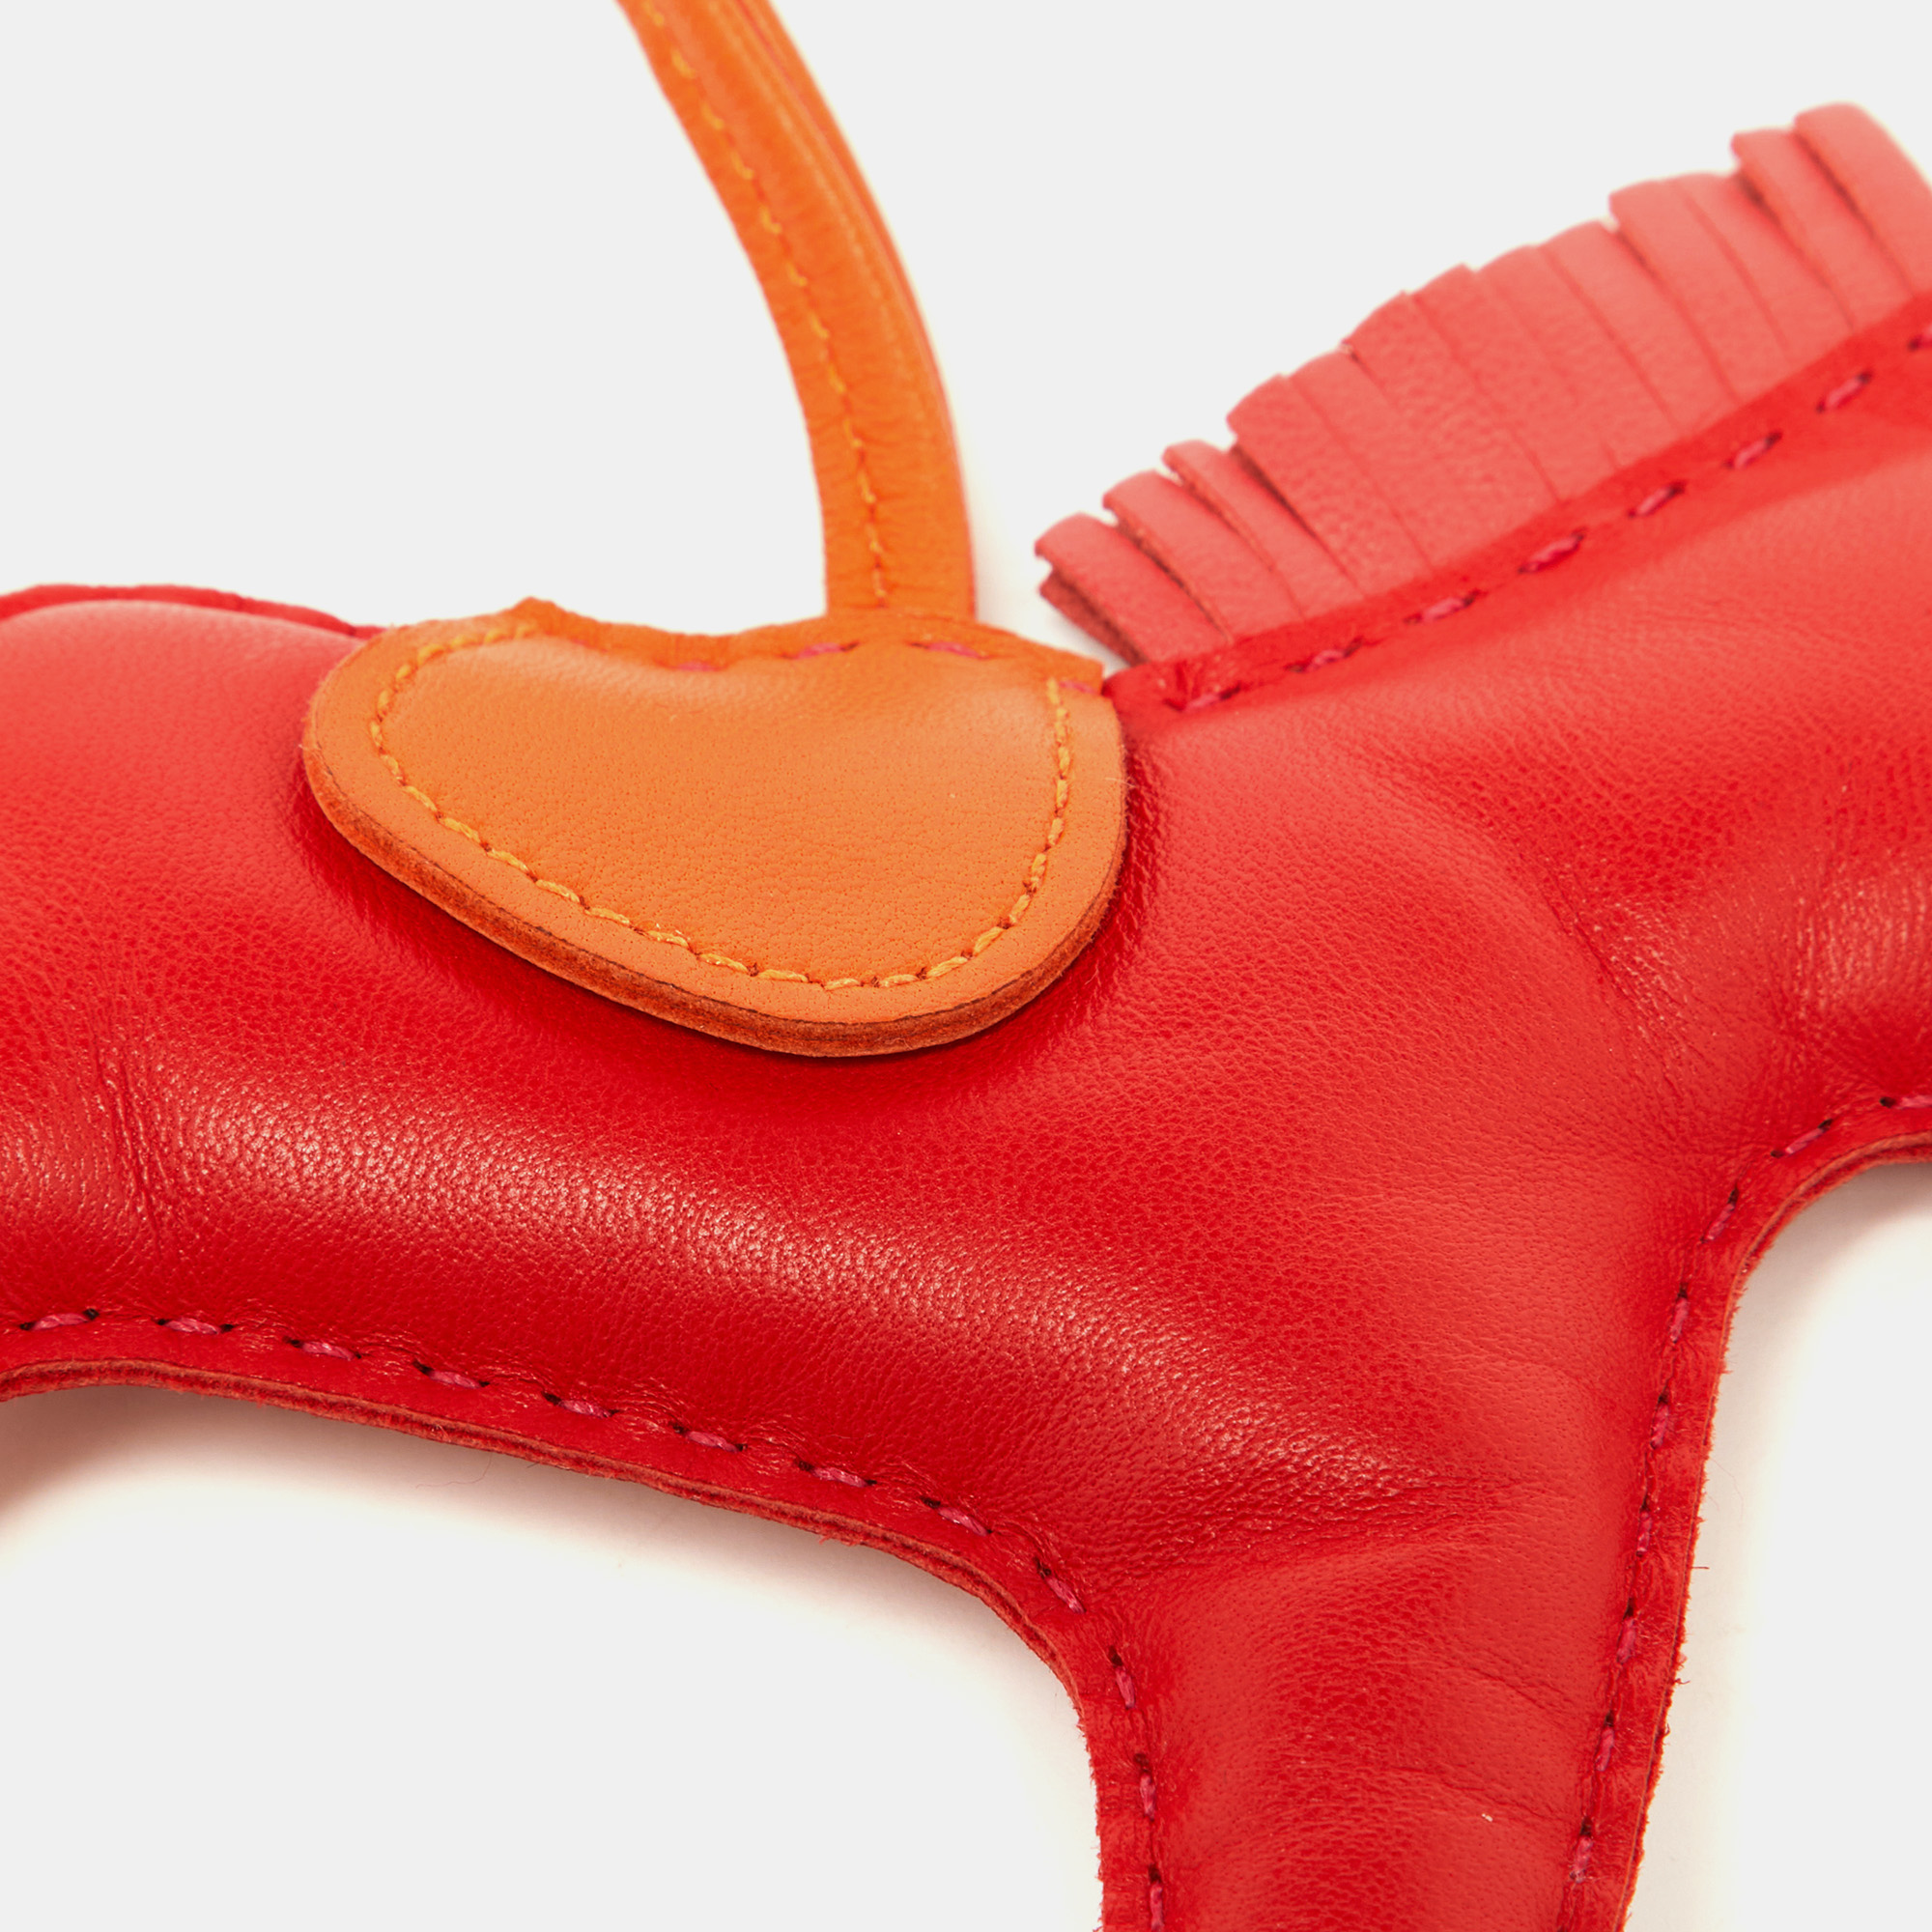 Hermes Red & Orange Leather Rodeo Fringed Bag Charm